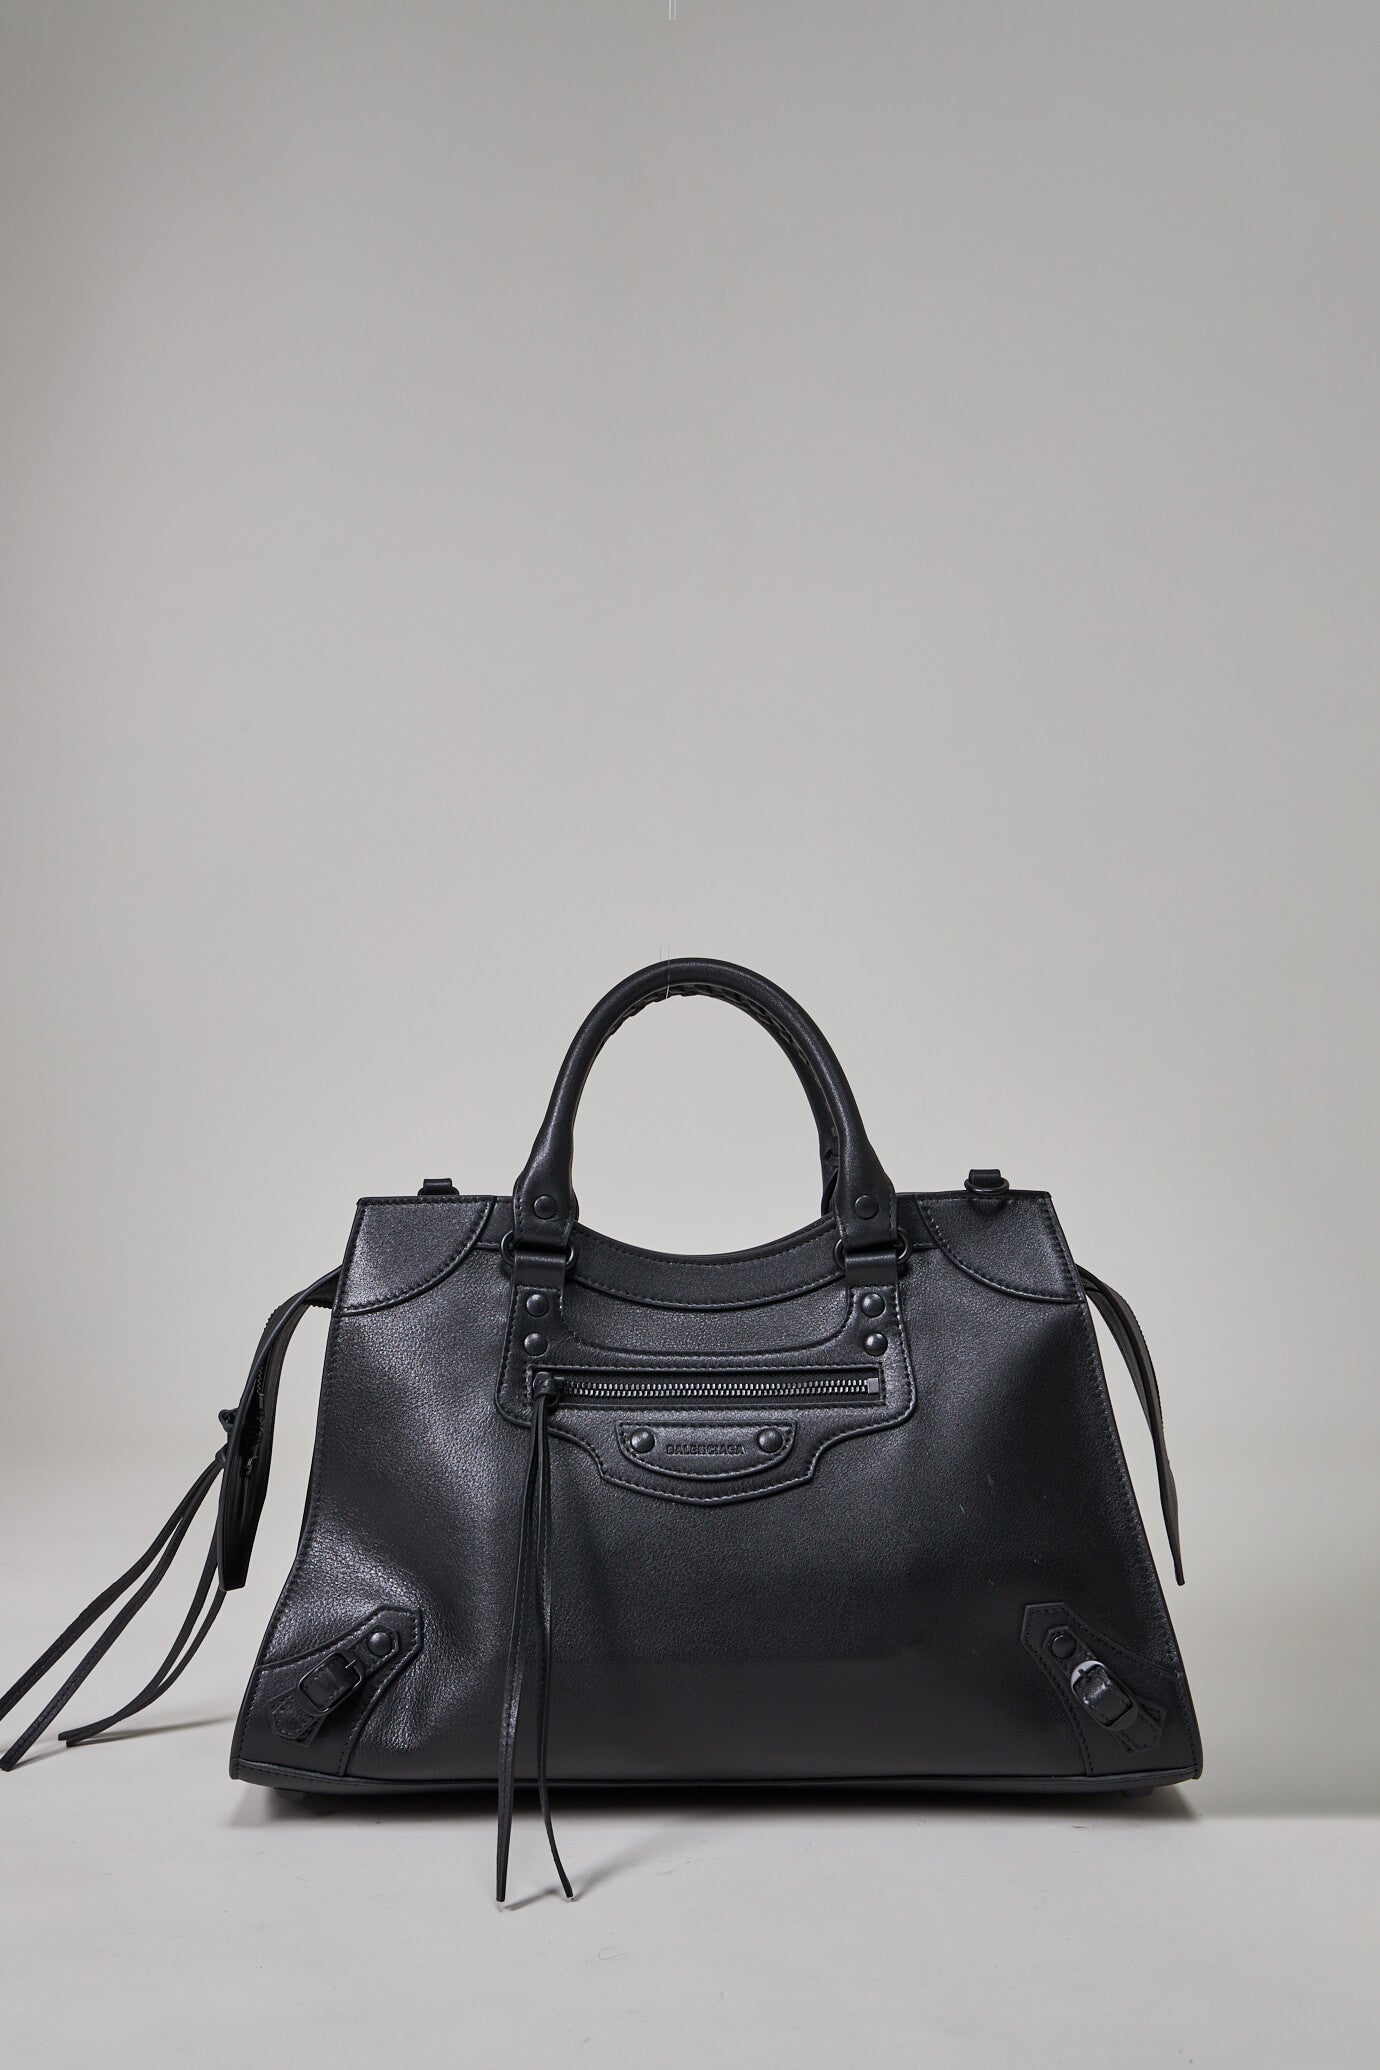 Balenciaga Neo Classic Multiple Leather Crossbody Bag In Grigio